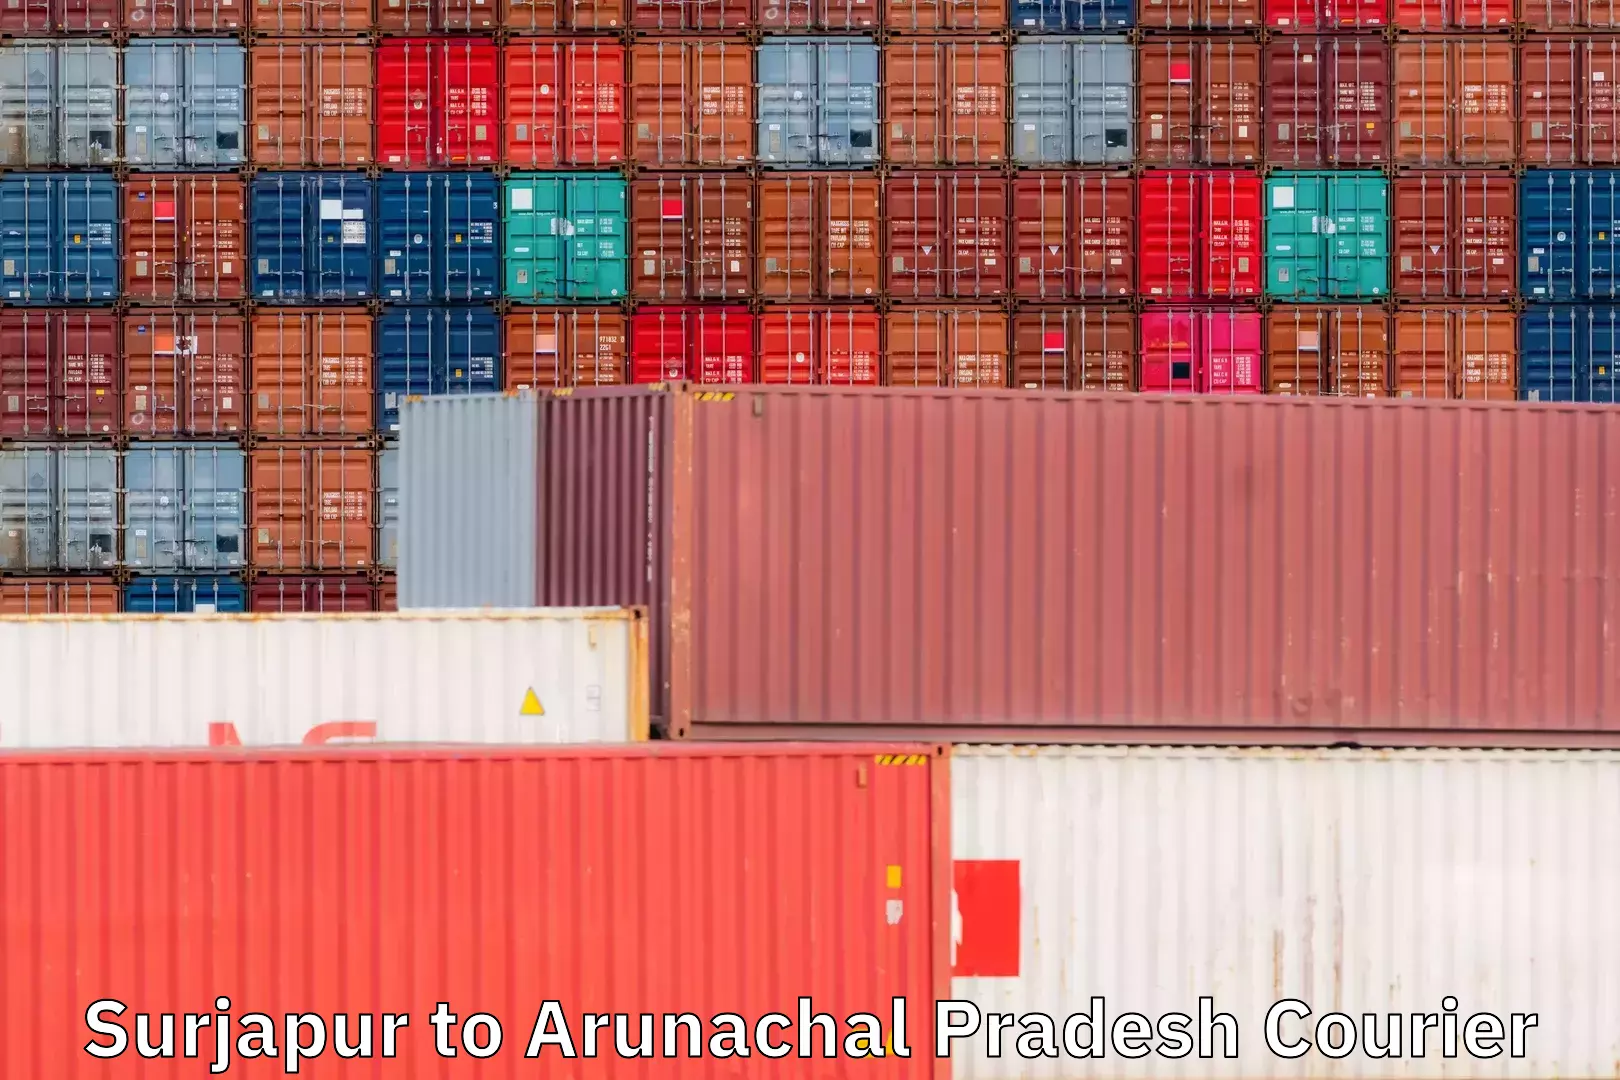 Reliable logistics providers Surjapur to Arunachal Pradesh